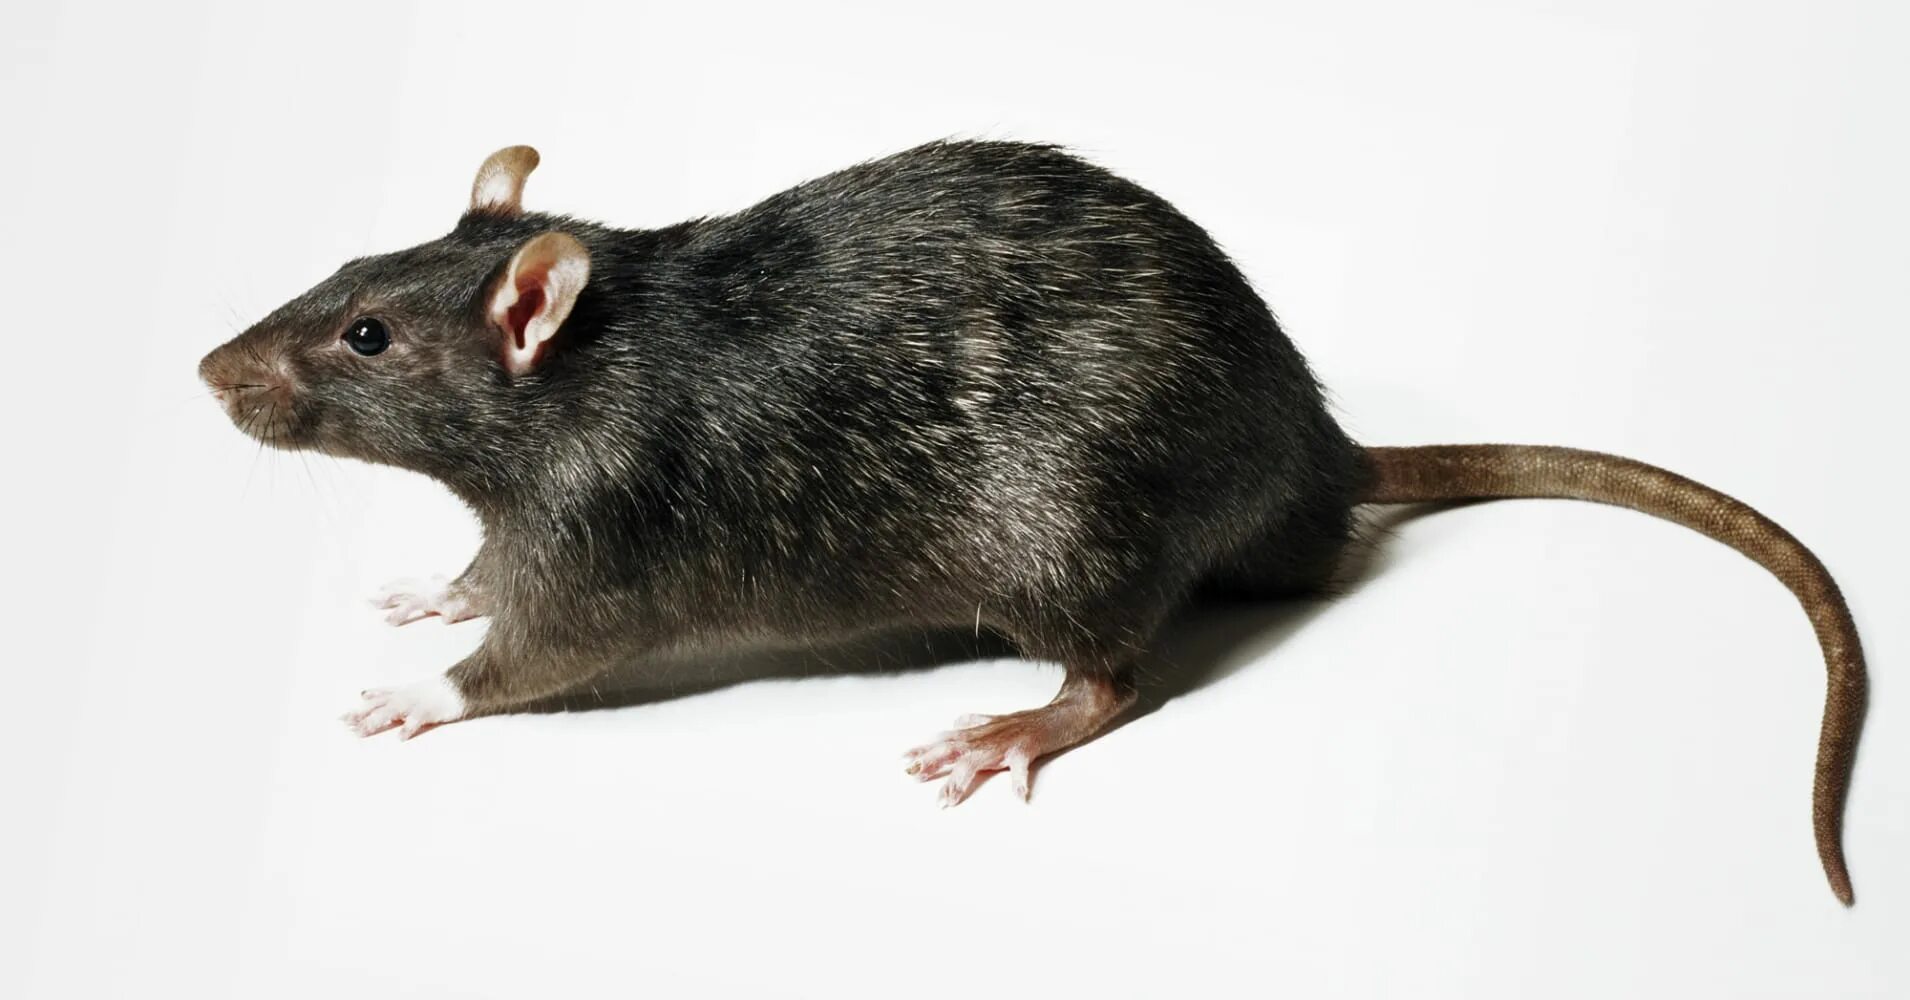 Мышь рост. Серая крыса Пасюк. Черная крыса. Азиатская крыса. Большая черная крыса.